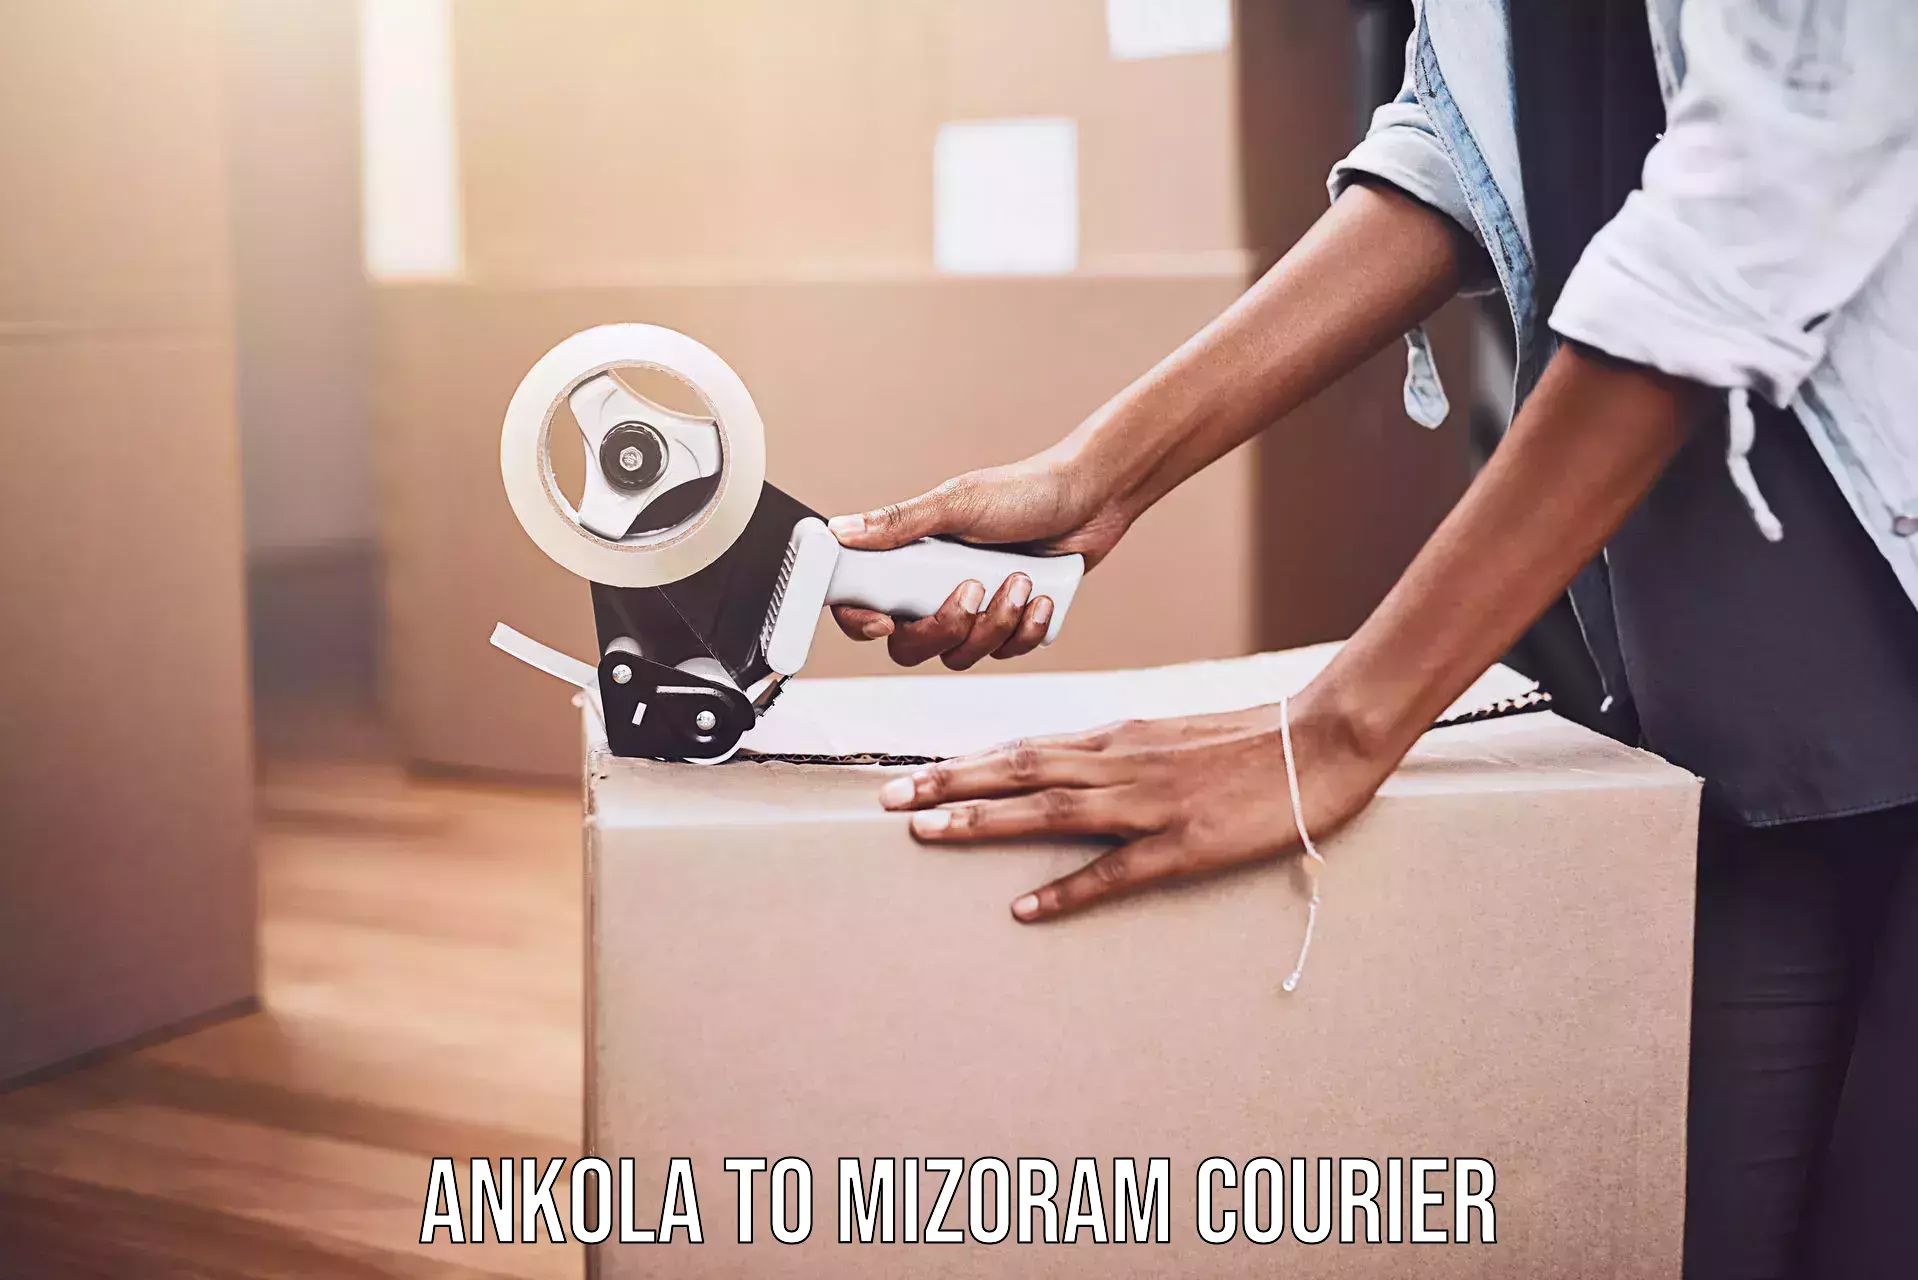 Express delivery capabilities Ankola to Mizoram